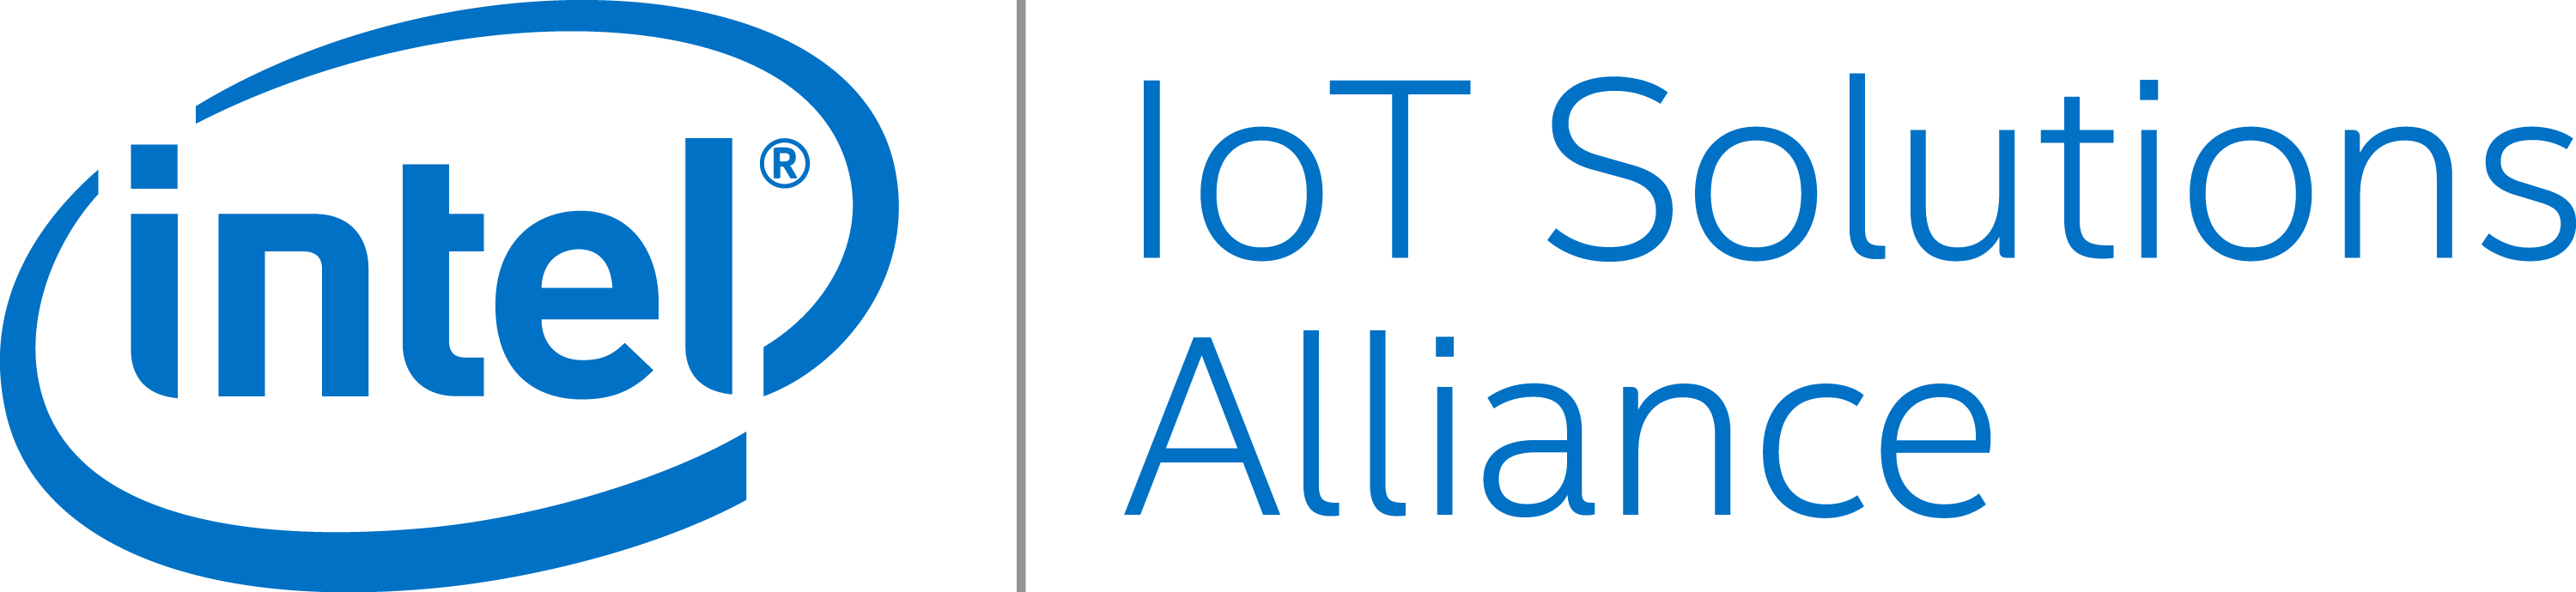 Intel IOT Solutions Alliance logo